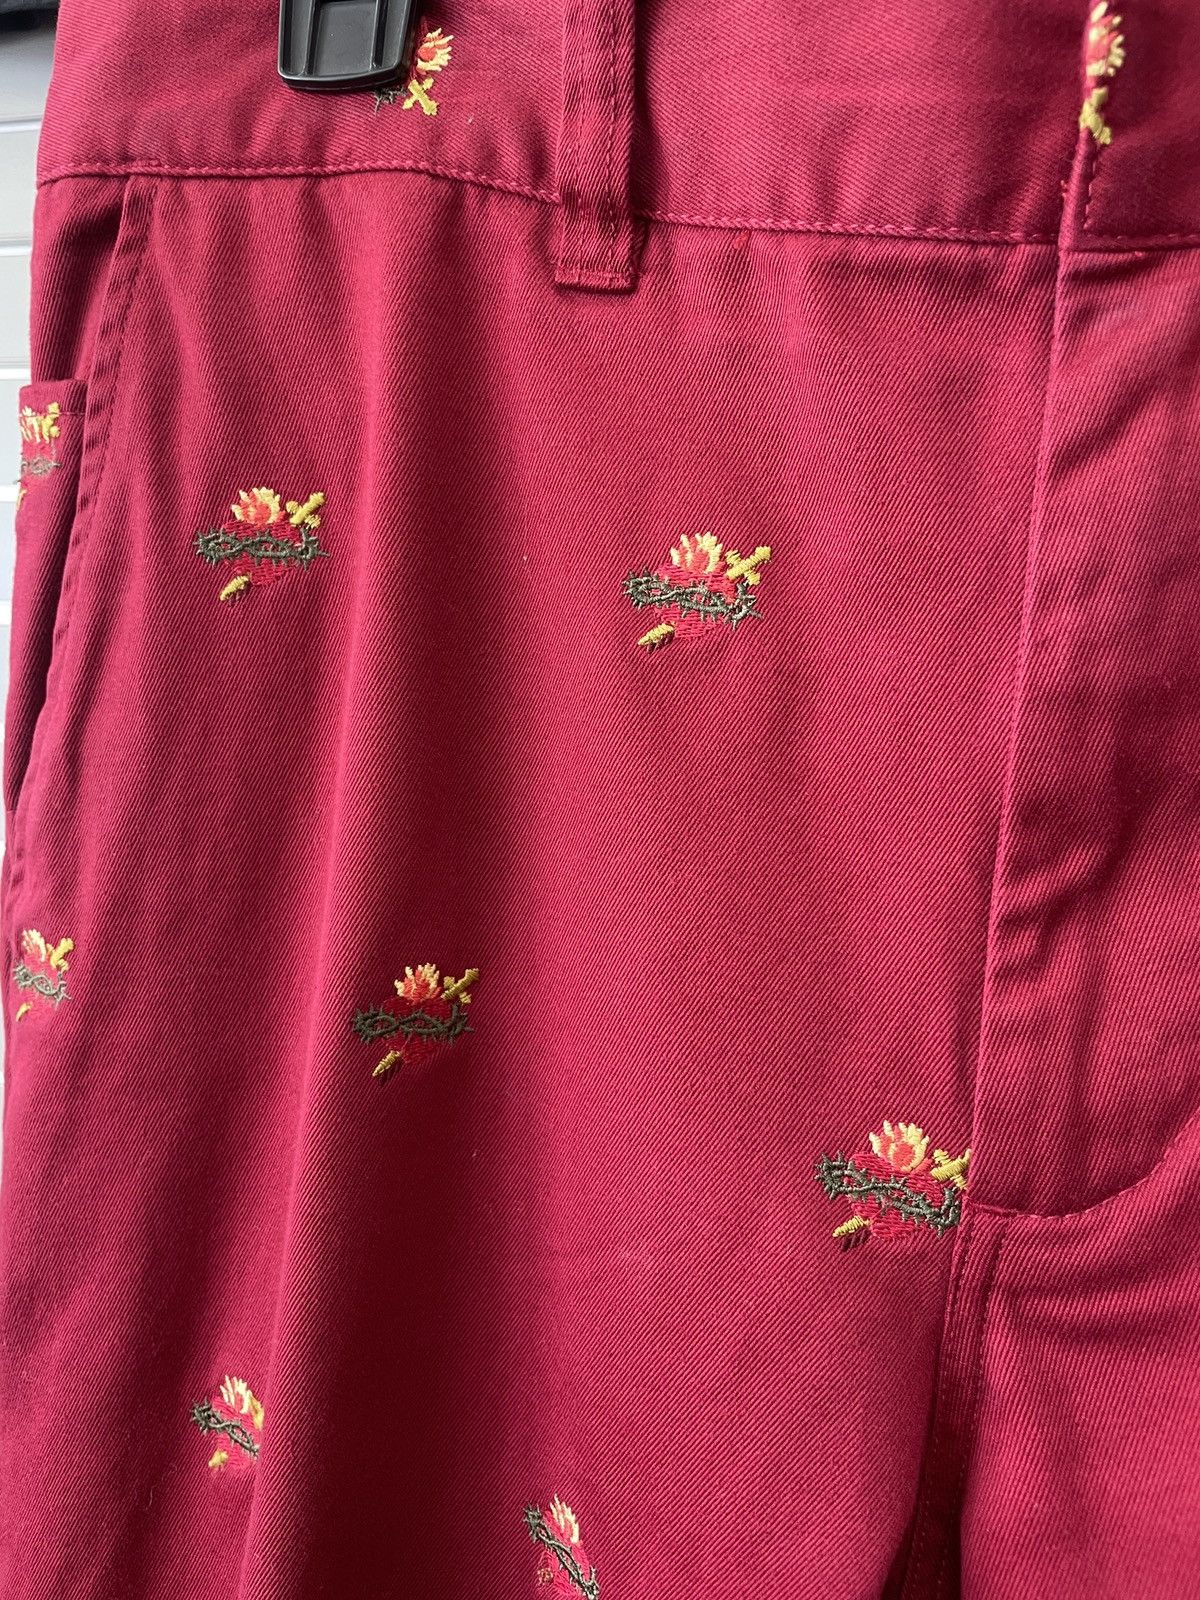 Supreme Supreme Red Sacred Hearts Pants Romeo Juliet Size 32 Size US 32 / EU 48 - 3 Thumbnail